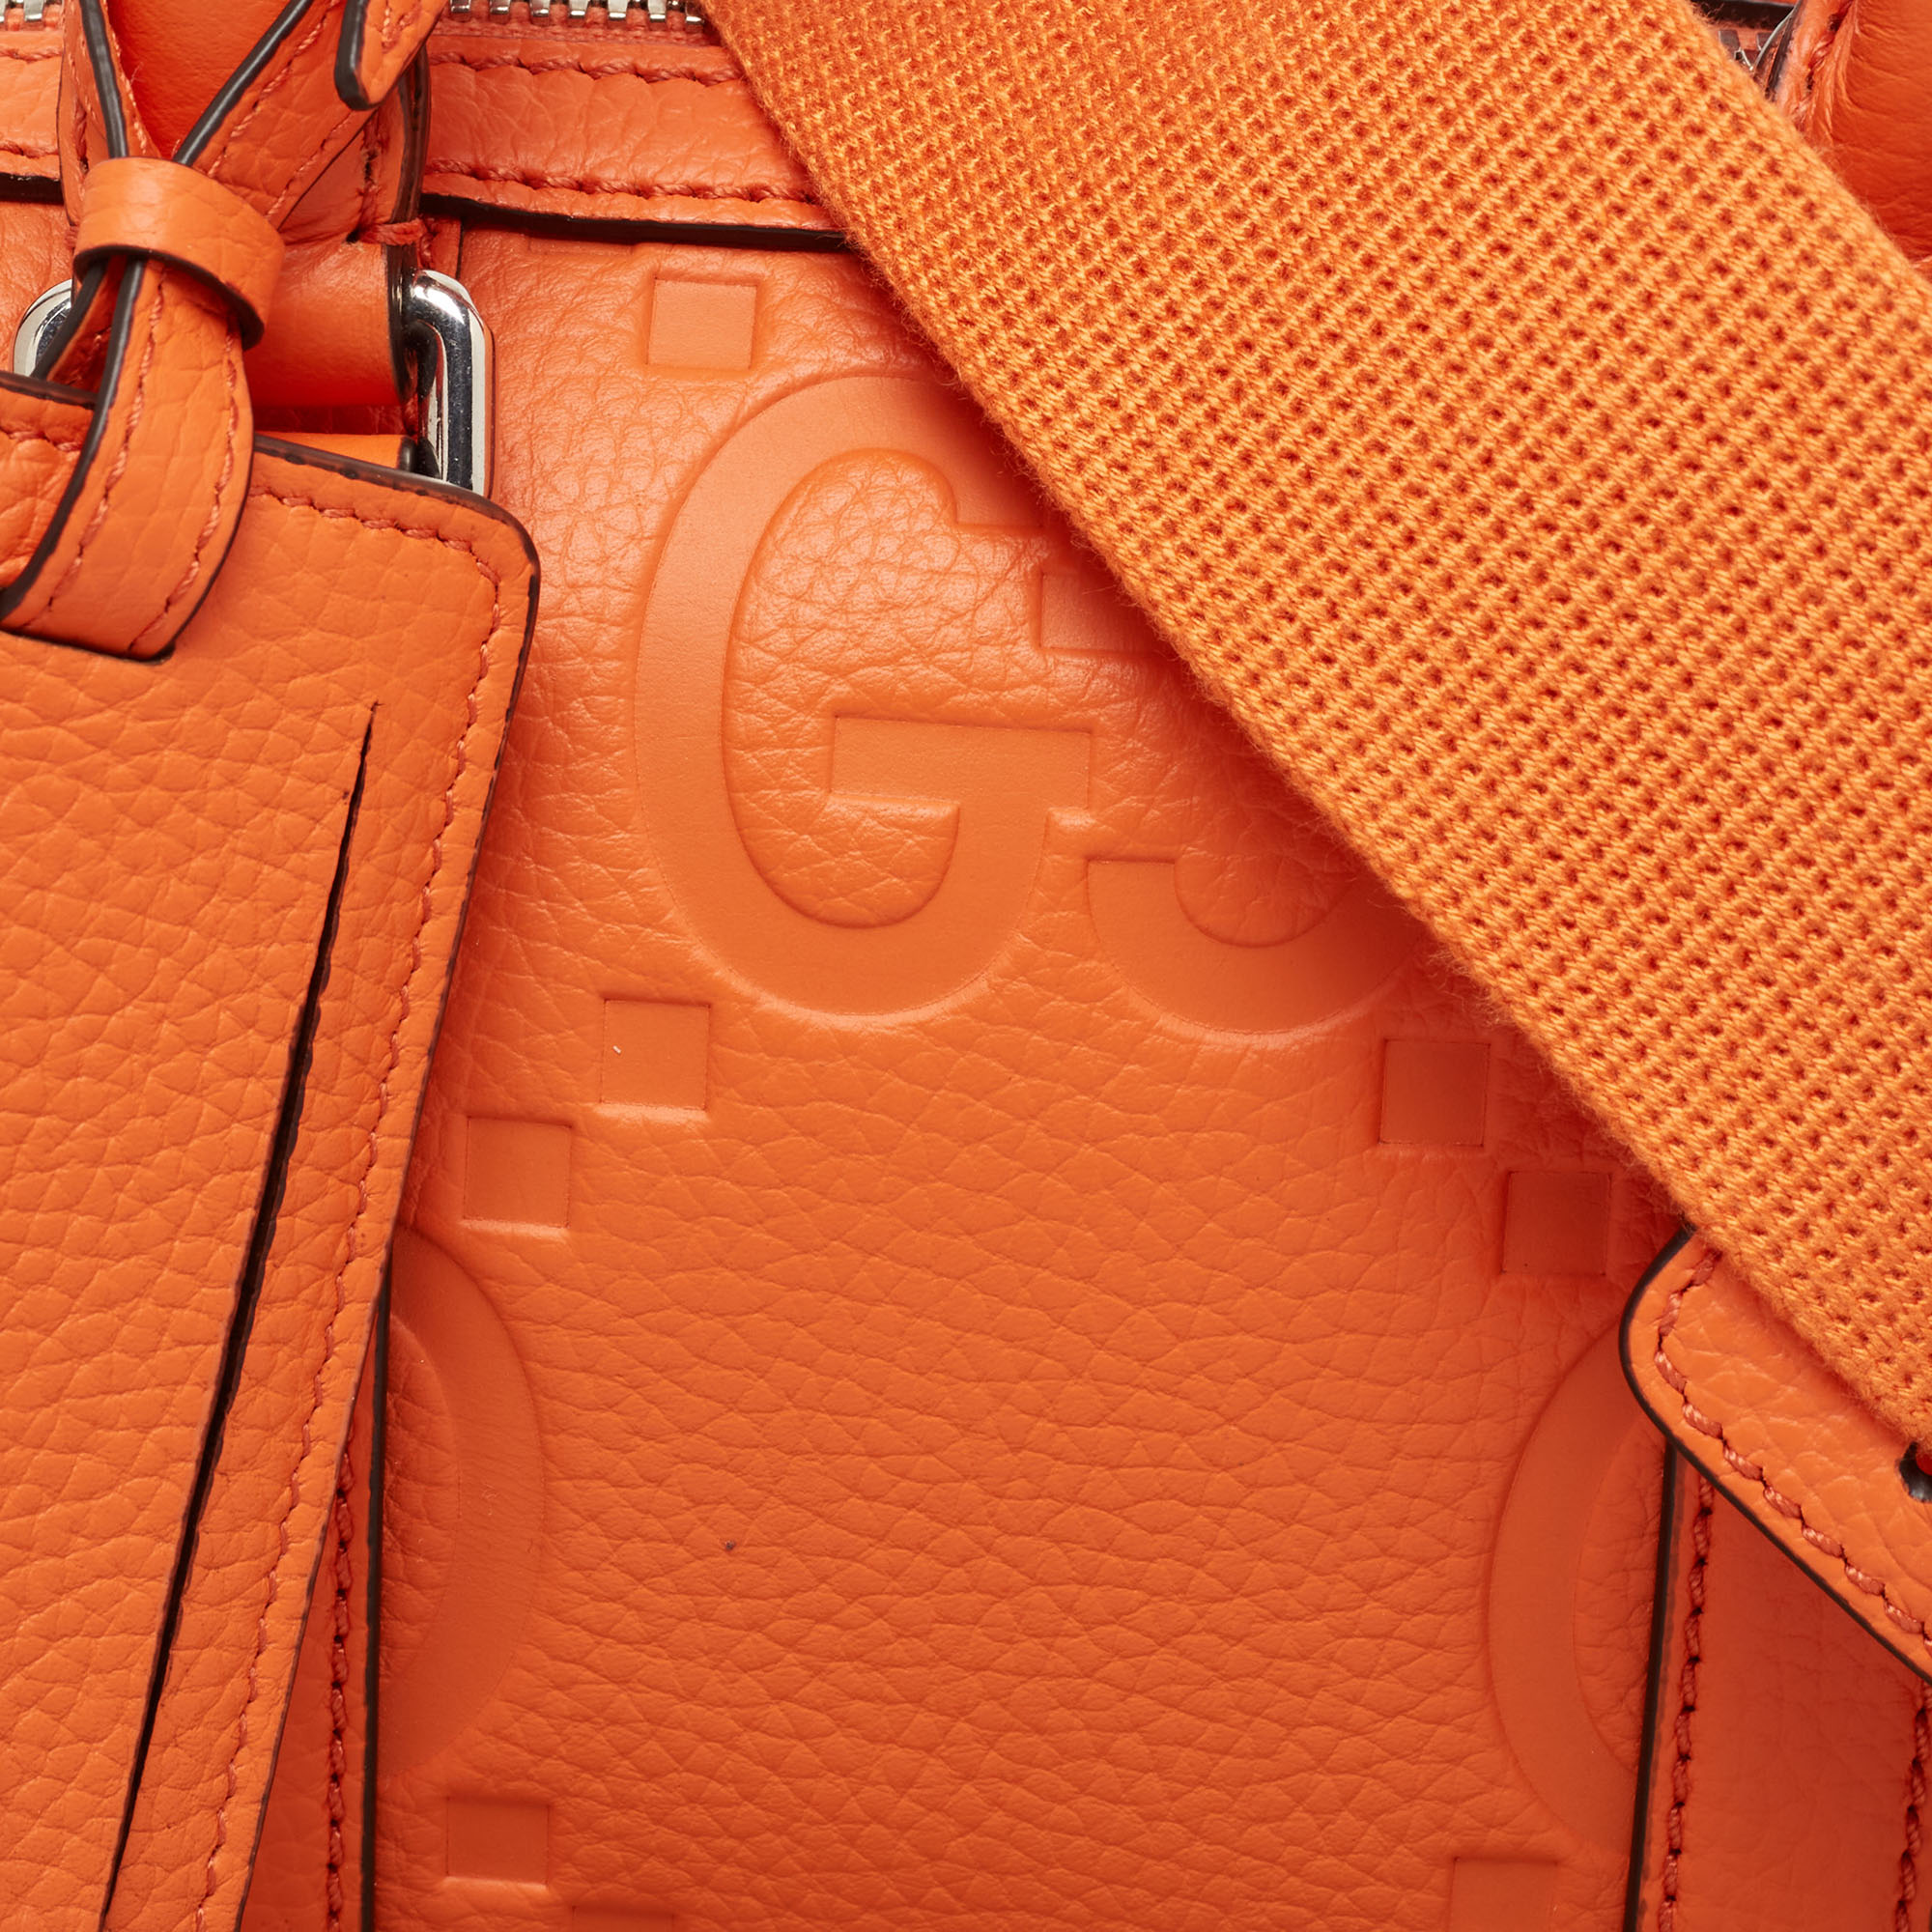 Gucci Orange Jumbo GG Leather Mini Duffle Bag